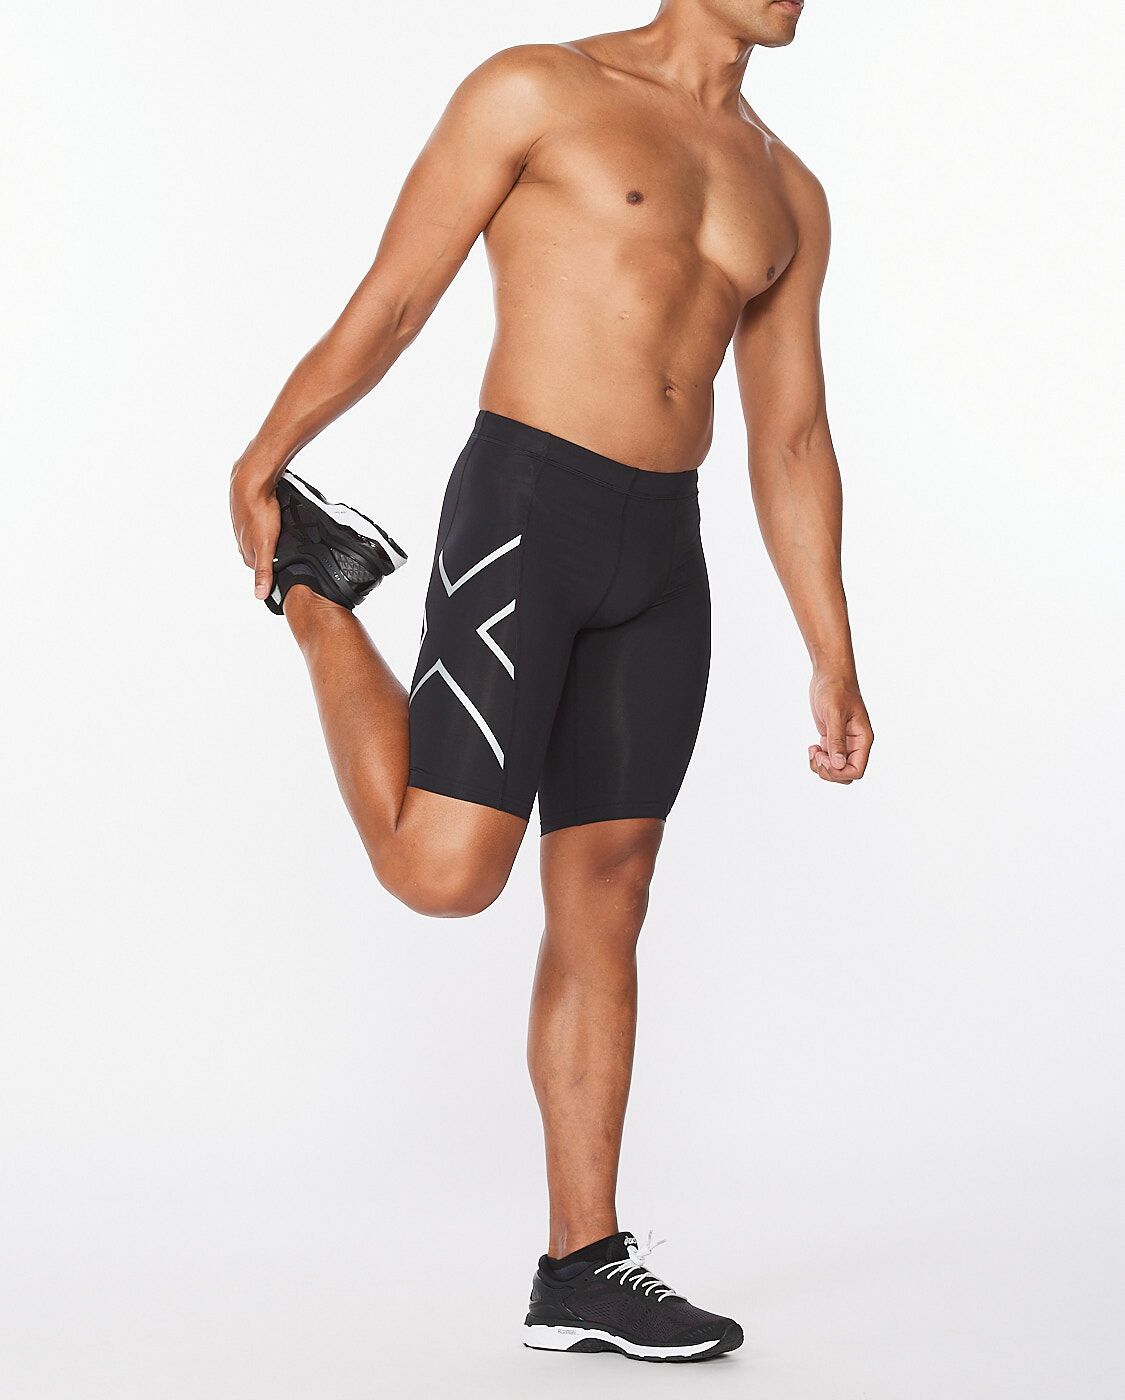 2XU South Africa - Men's Core Compression Shorts - Black - Black/Silver